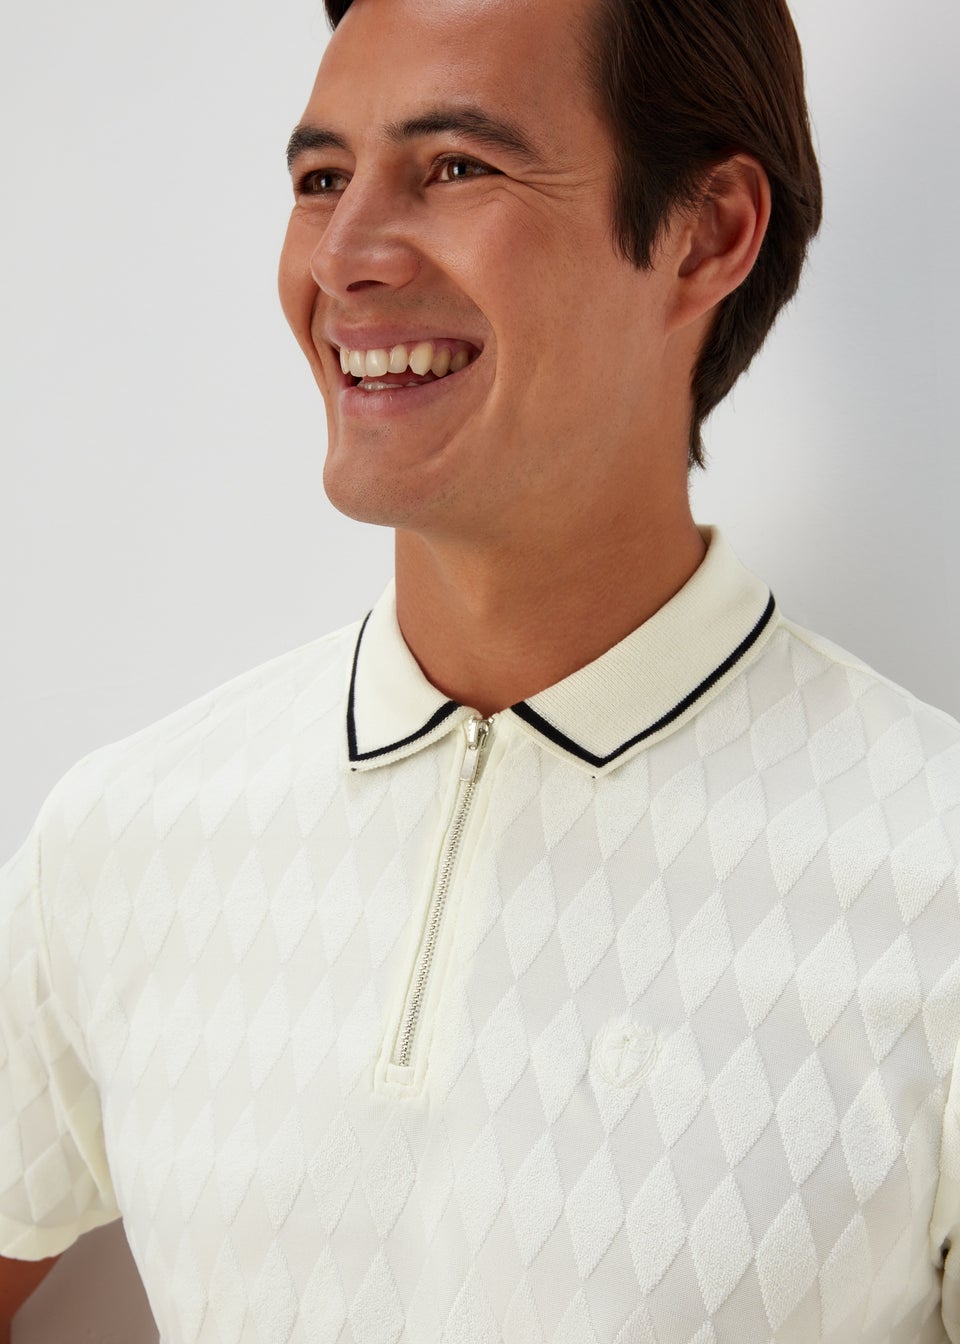 White Argyle Smart Towelling Zip Up Polo Shirt